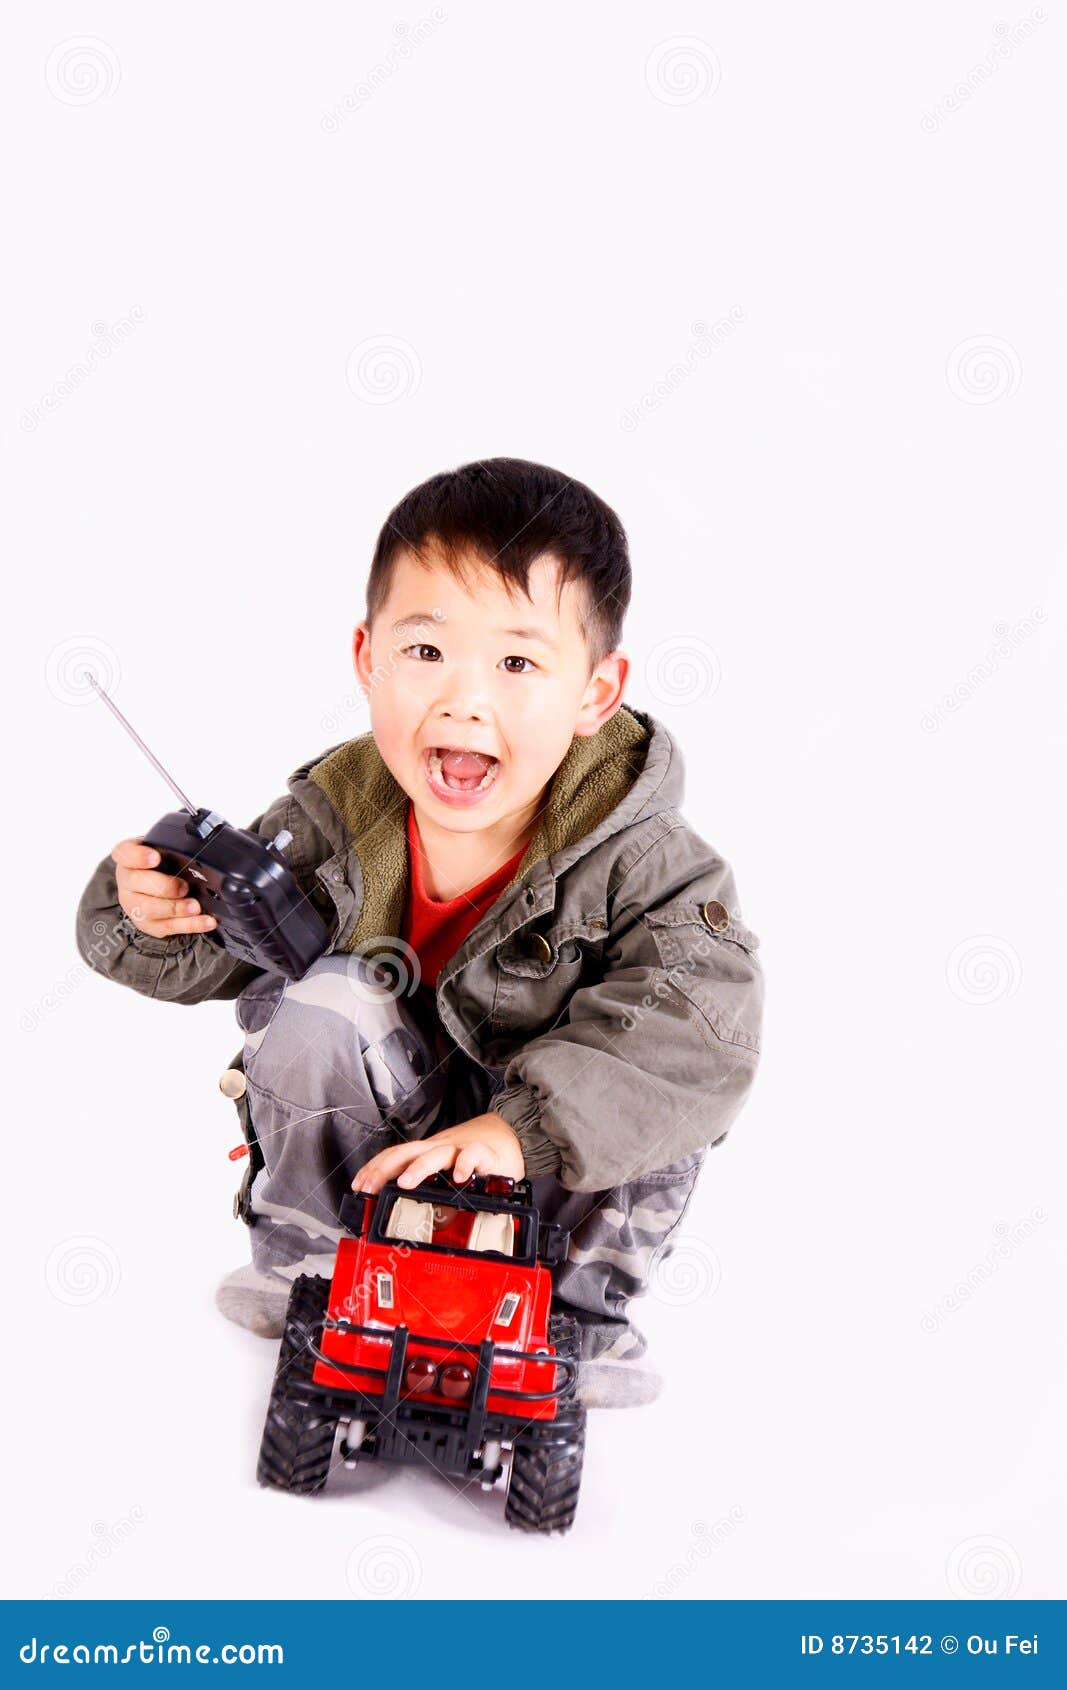 Remote Control Car Remote Boy and remote control car